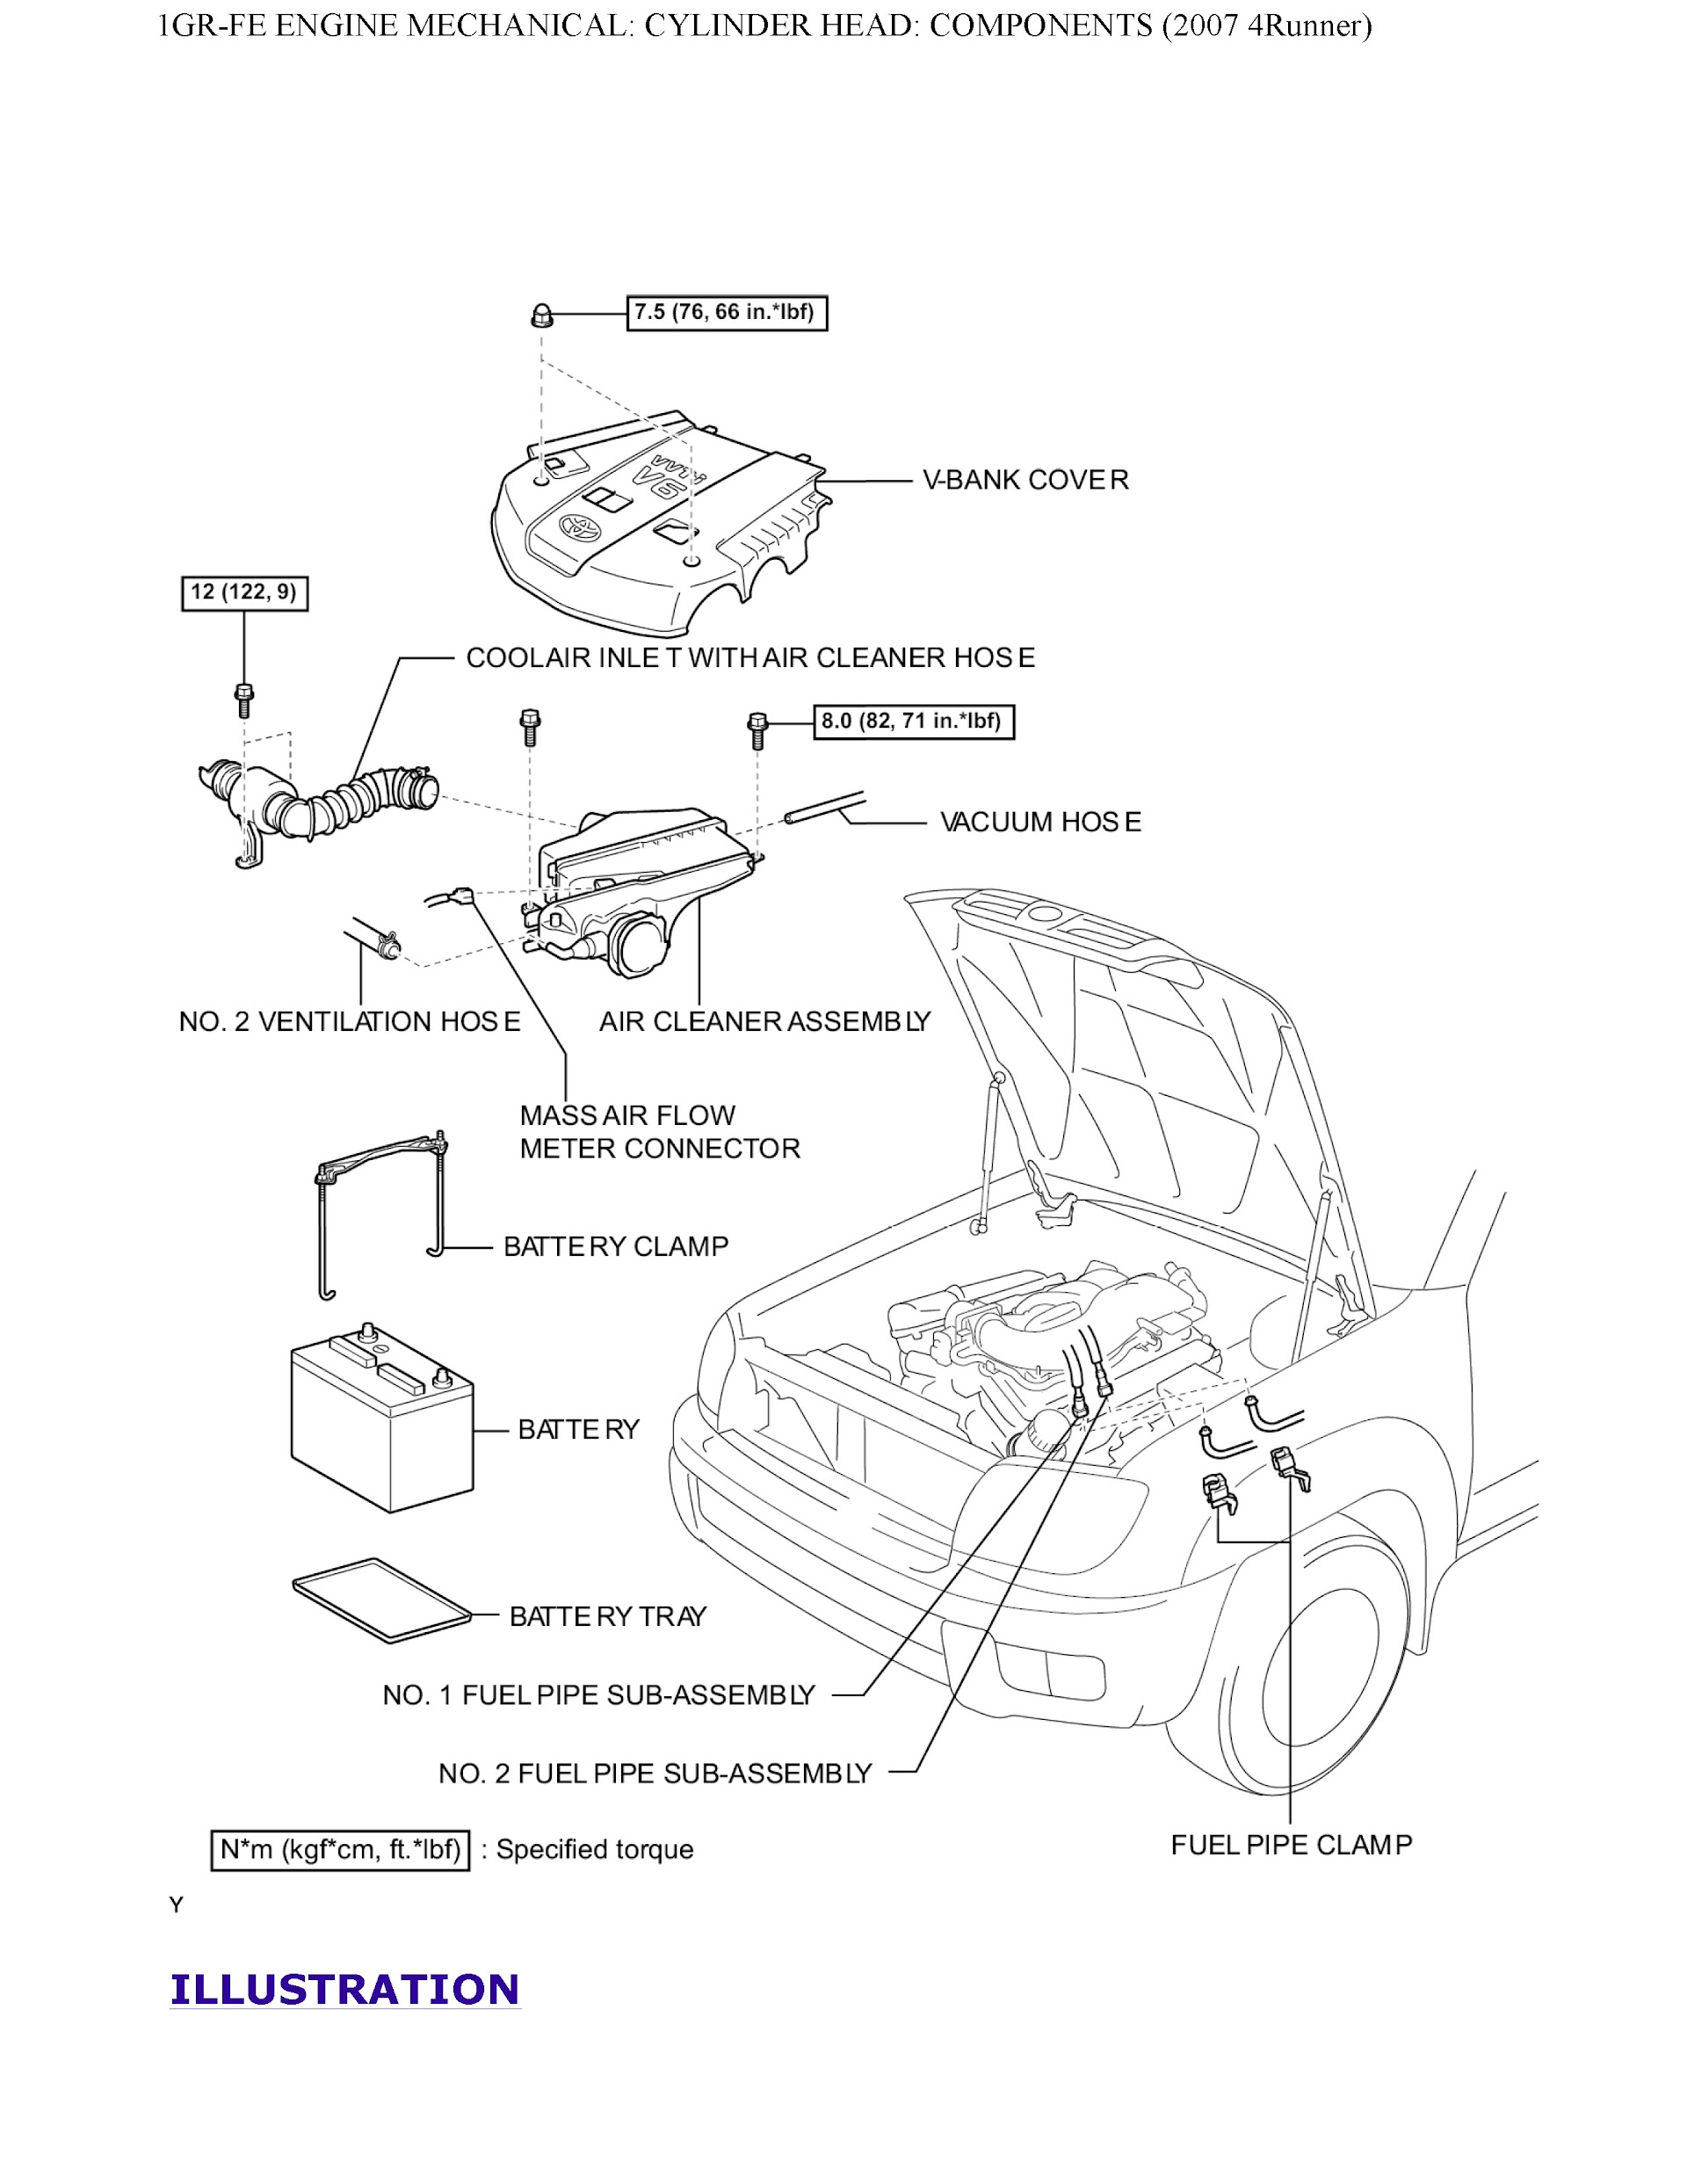 2007 Toyota 4Runner Repair Manual, 1GR-FE Engine Mechanical